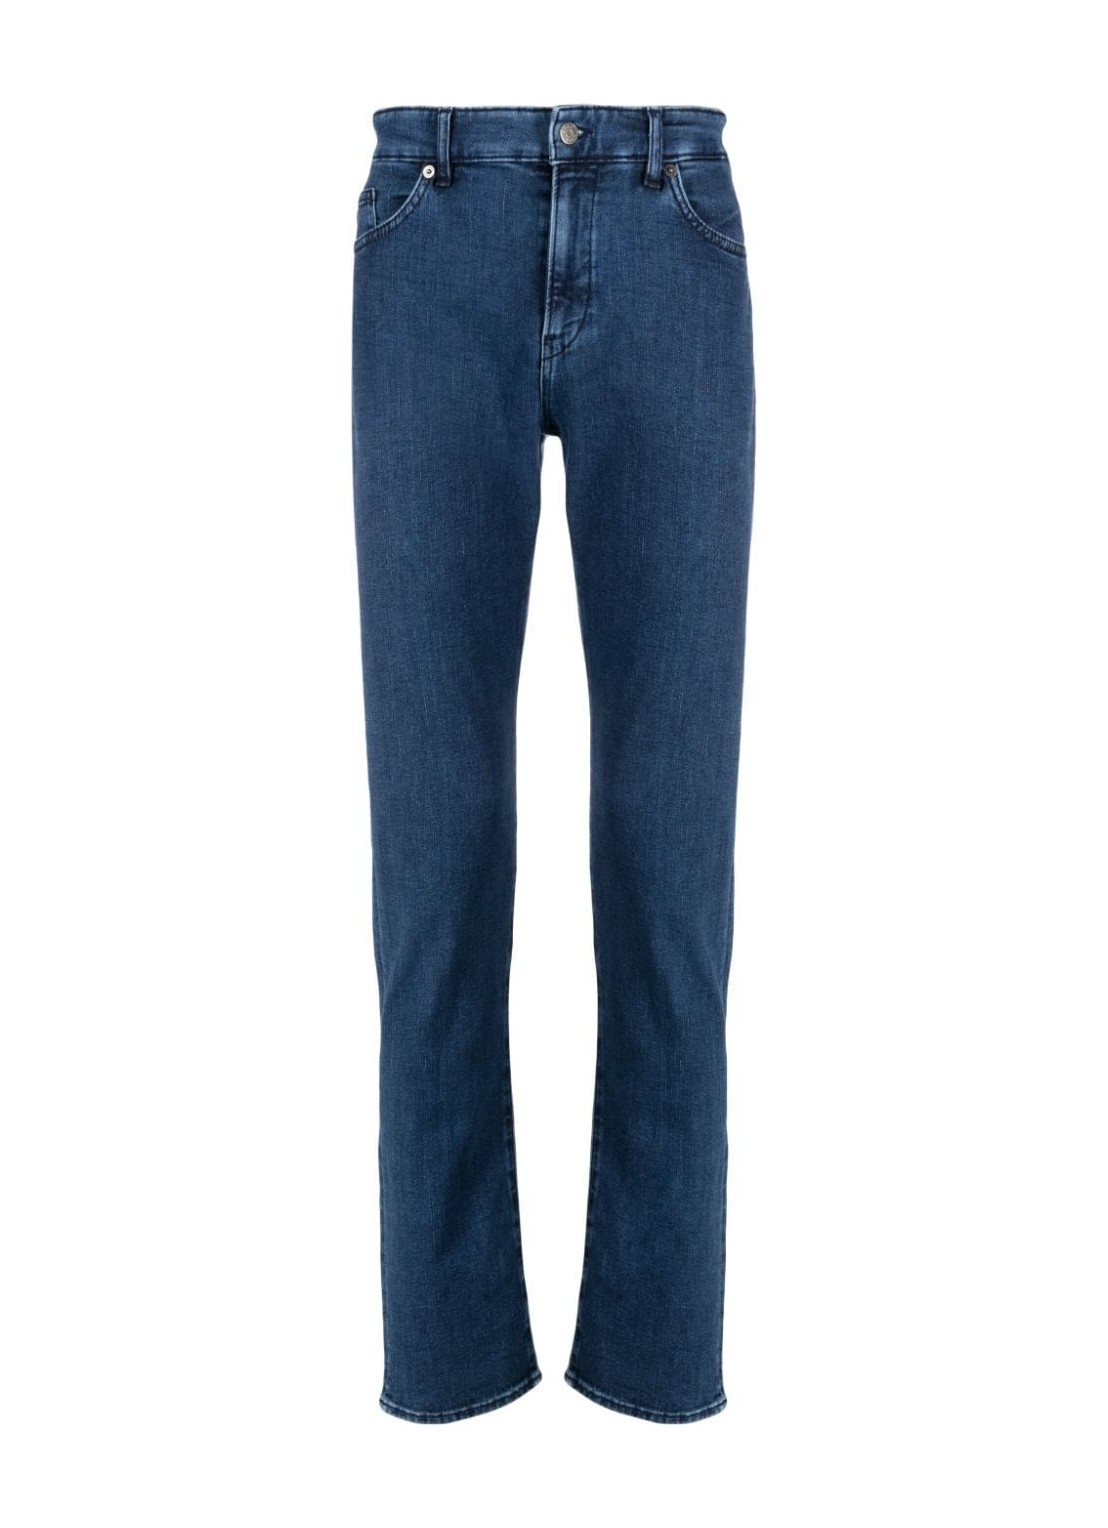 Pantalon jeans boss denim man delaware3-1 50502785 419 talla 34
 